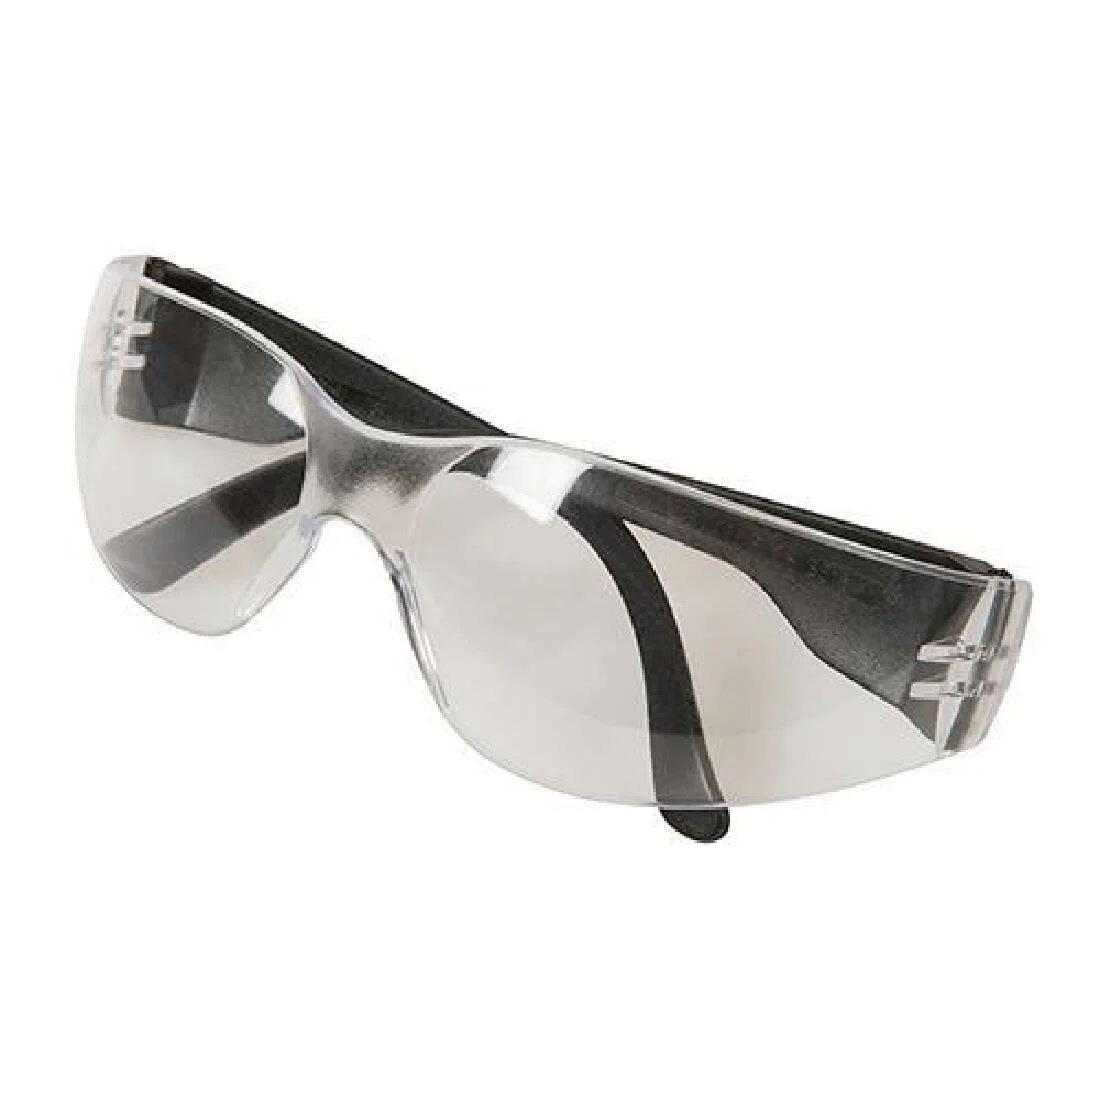 Wraparound Safety Glasses - DF136  - 1